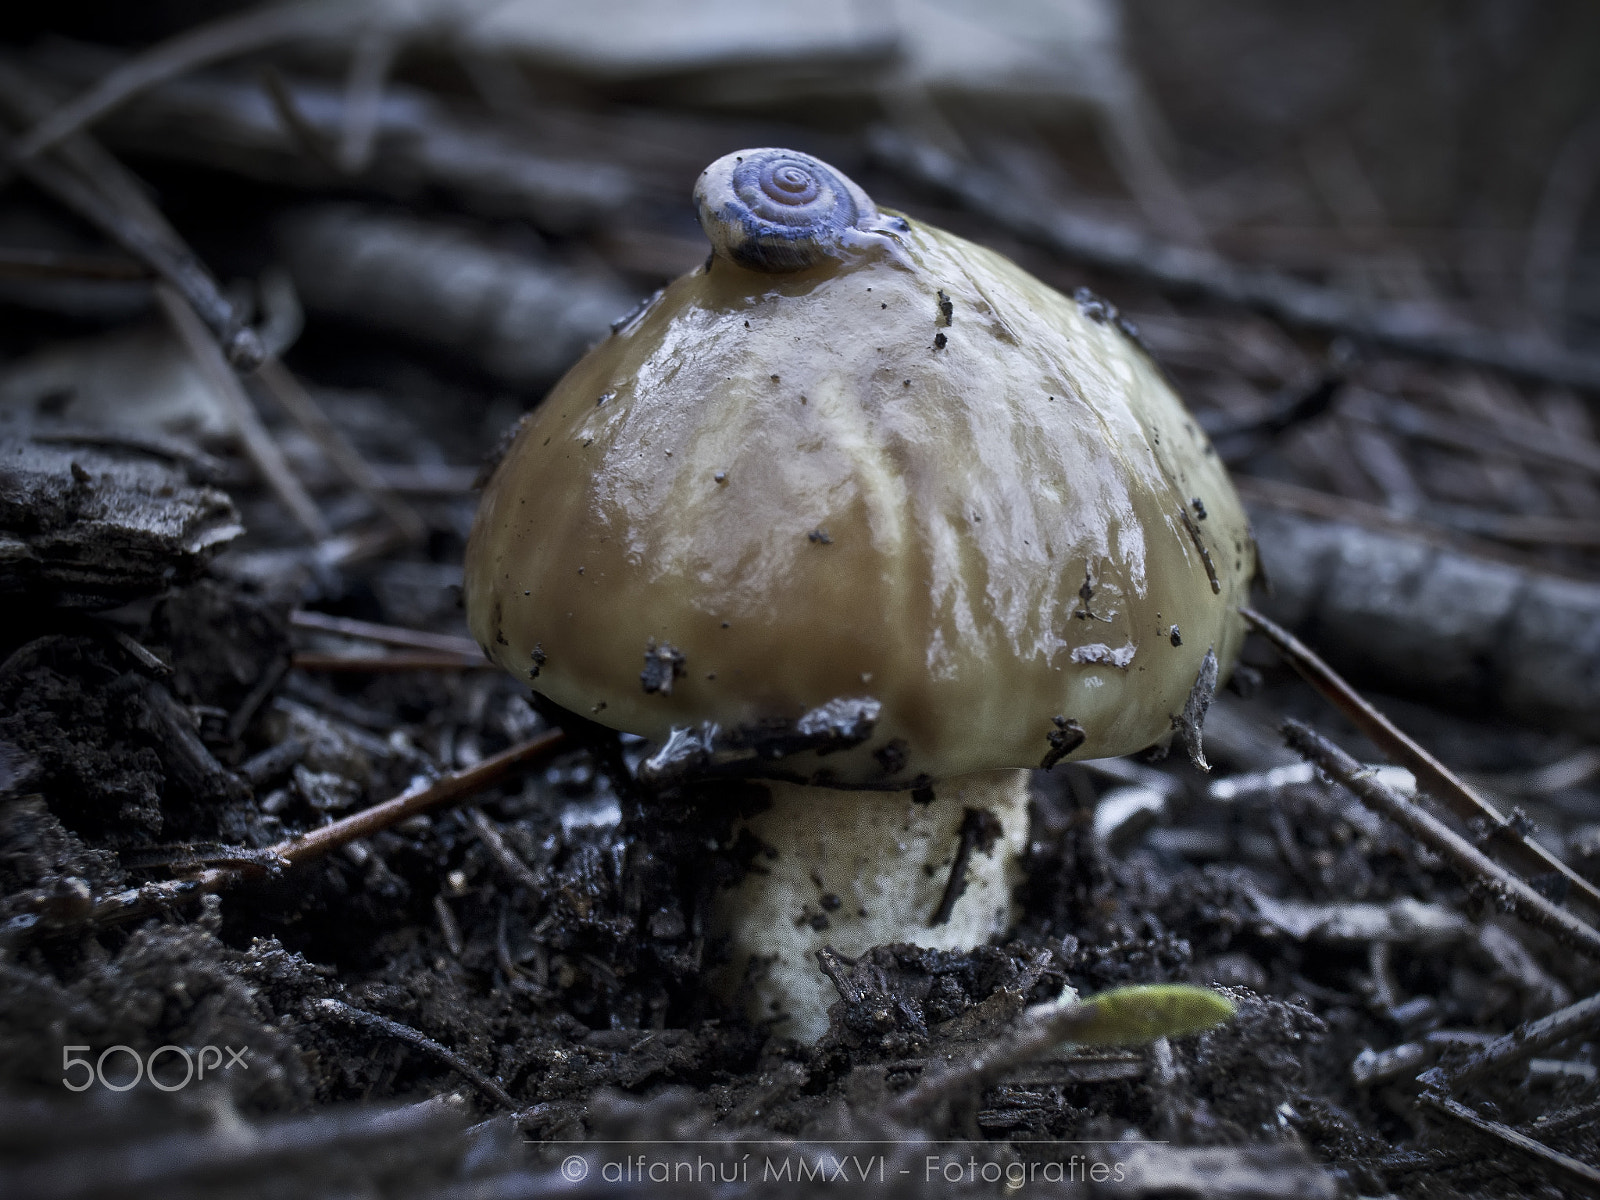 Olympus PEN E-PL5 sample photo. A snail on a mushroom photography